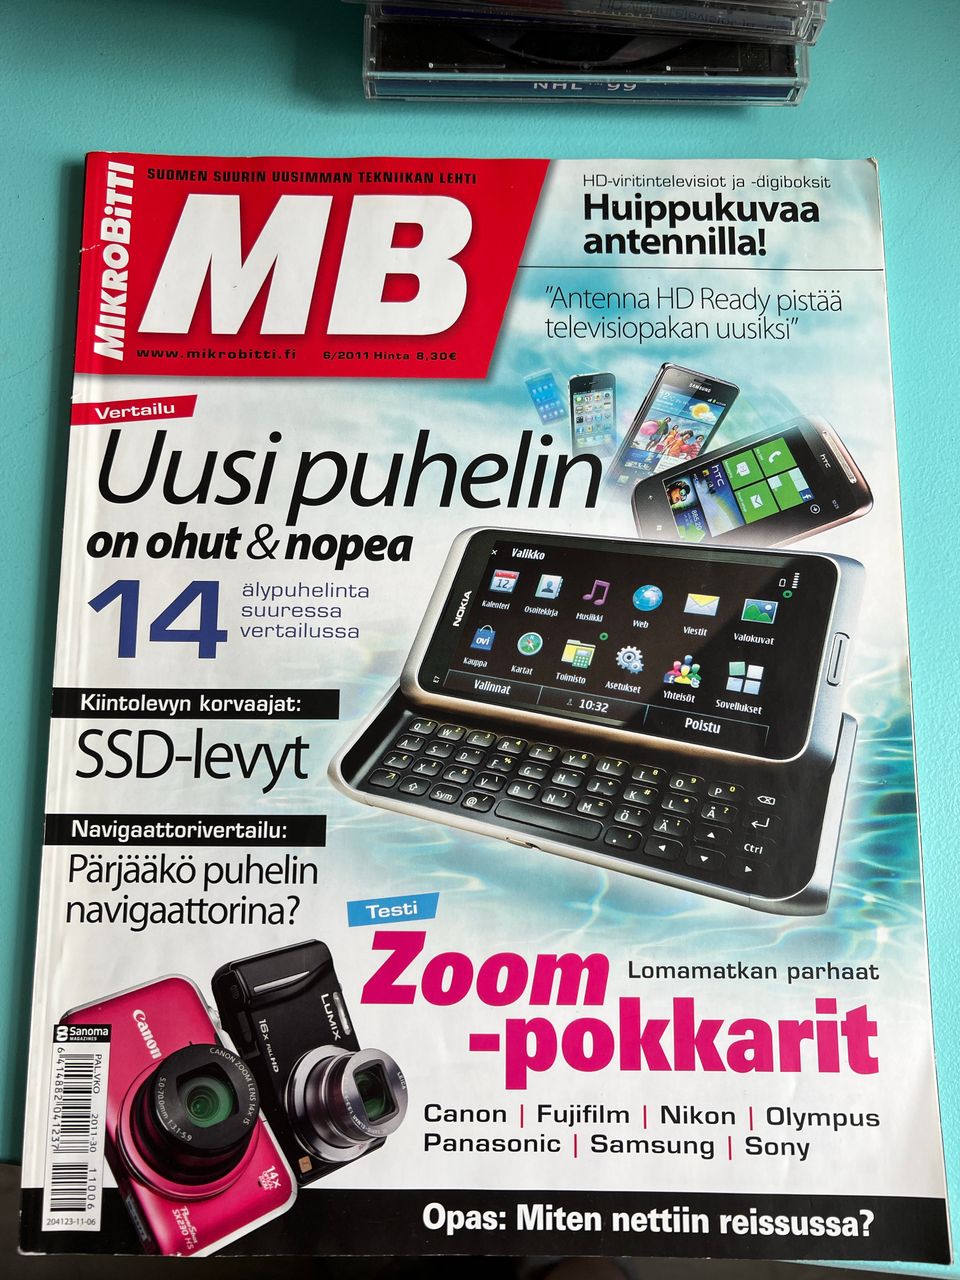 MikroBitti lehti 6/2011